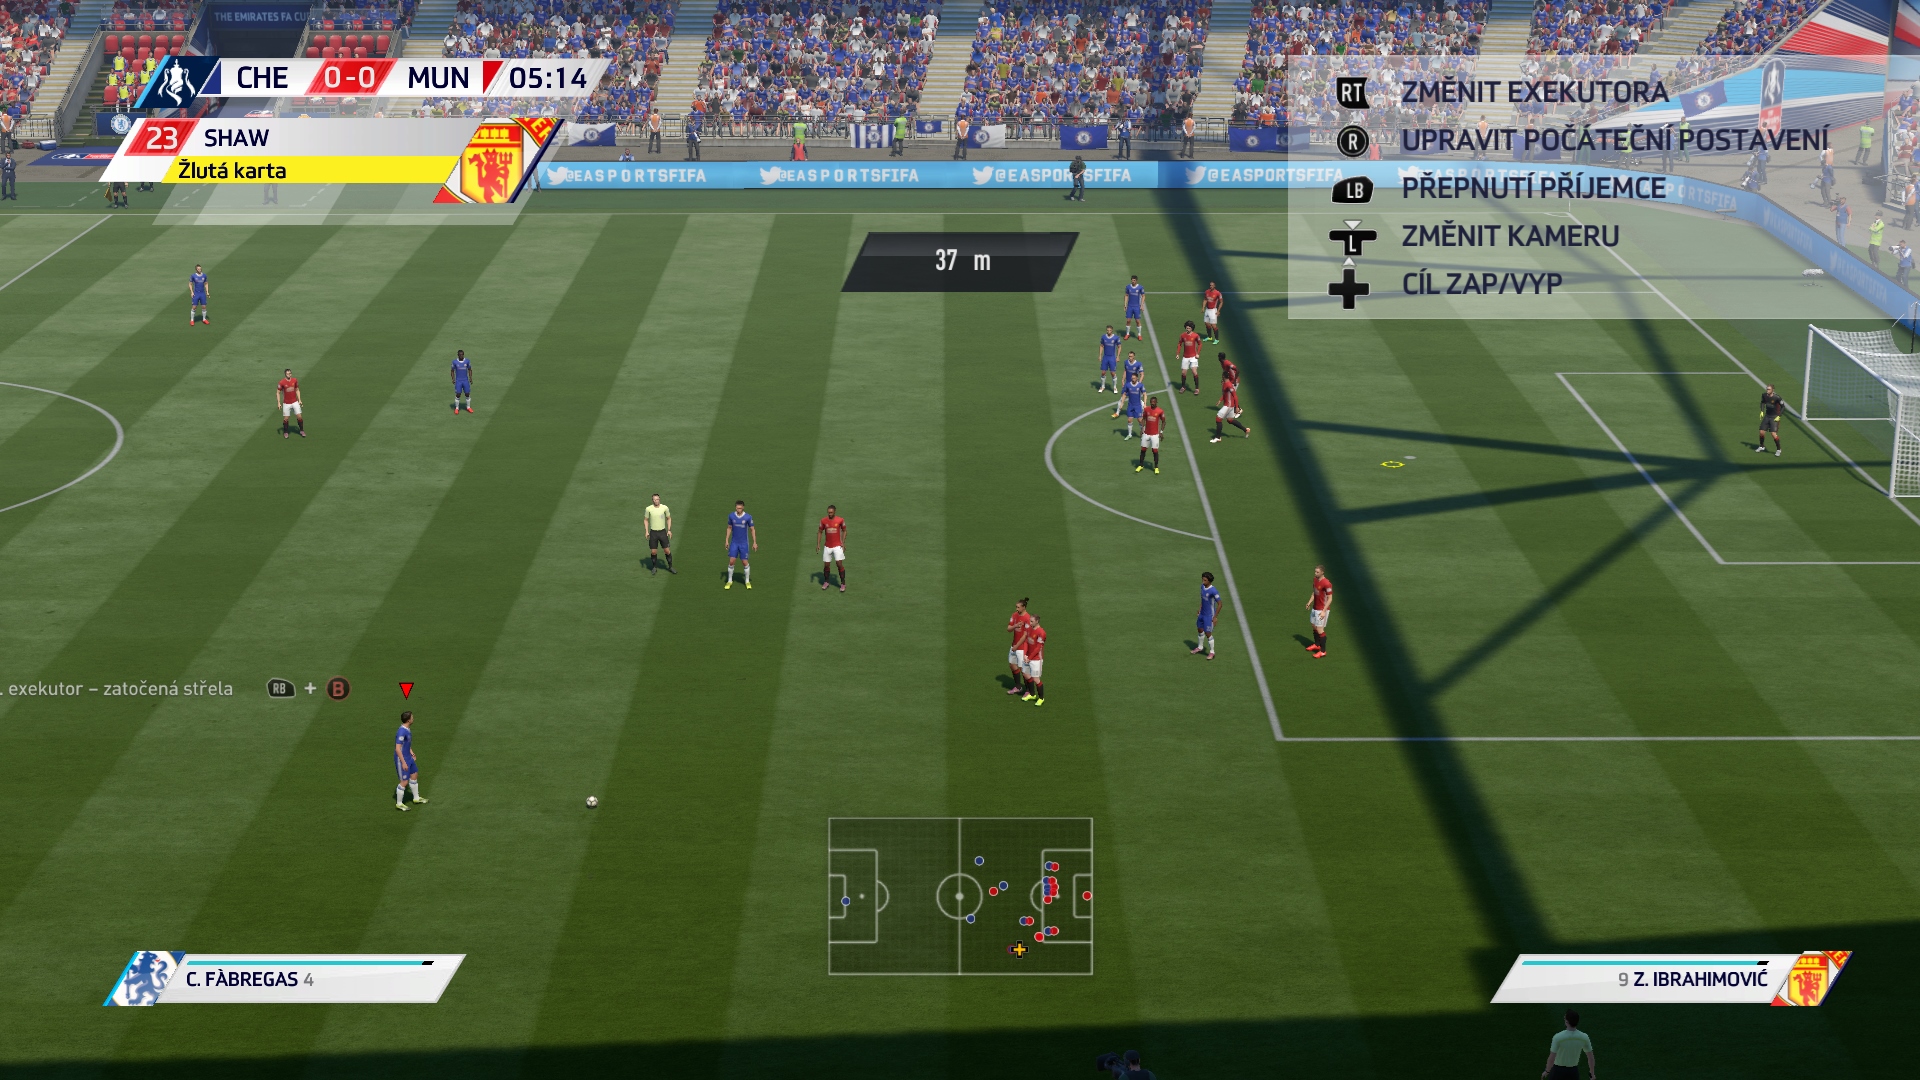 FIFA 17 Hra prina vea zmien v tandardkch.